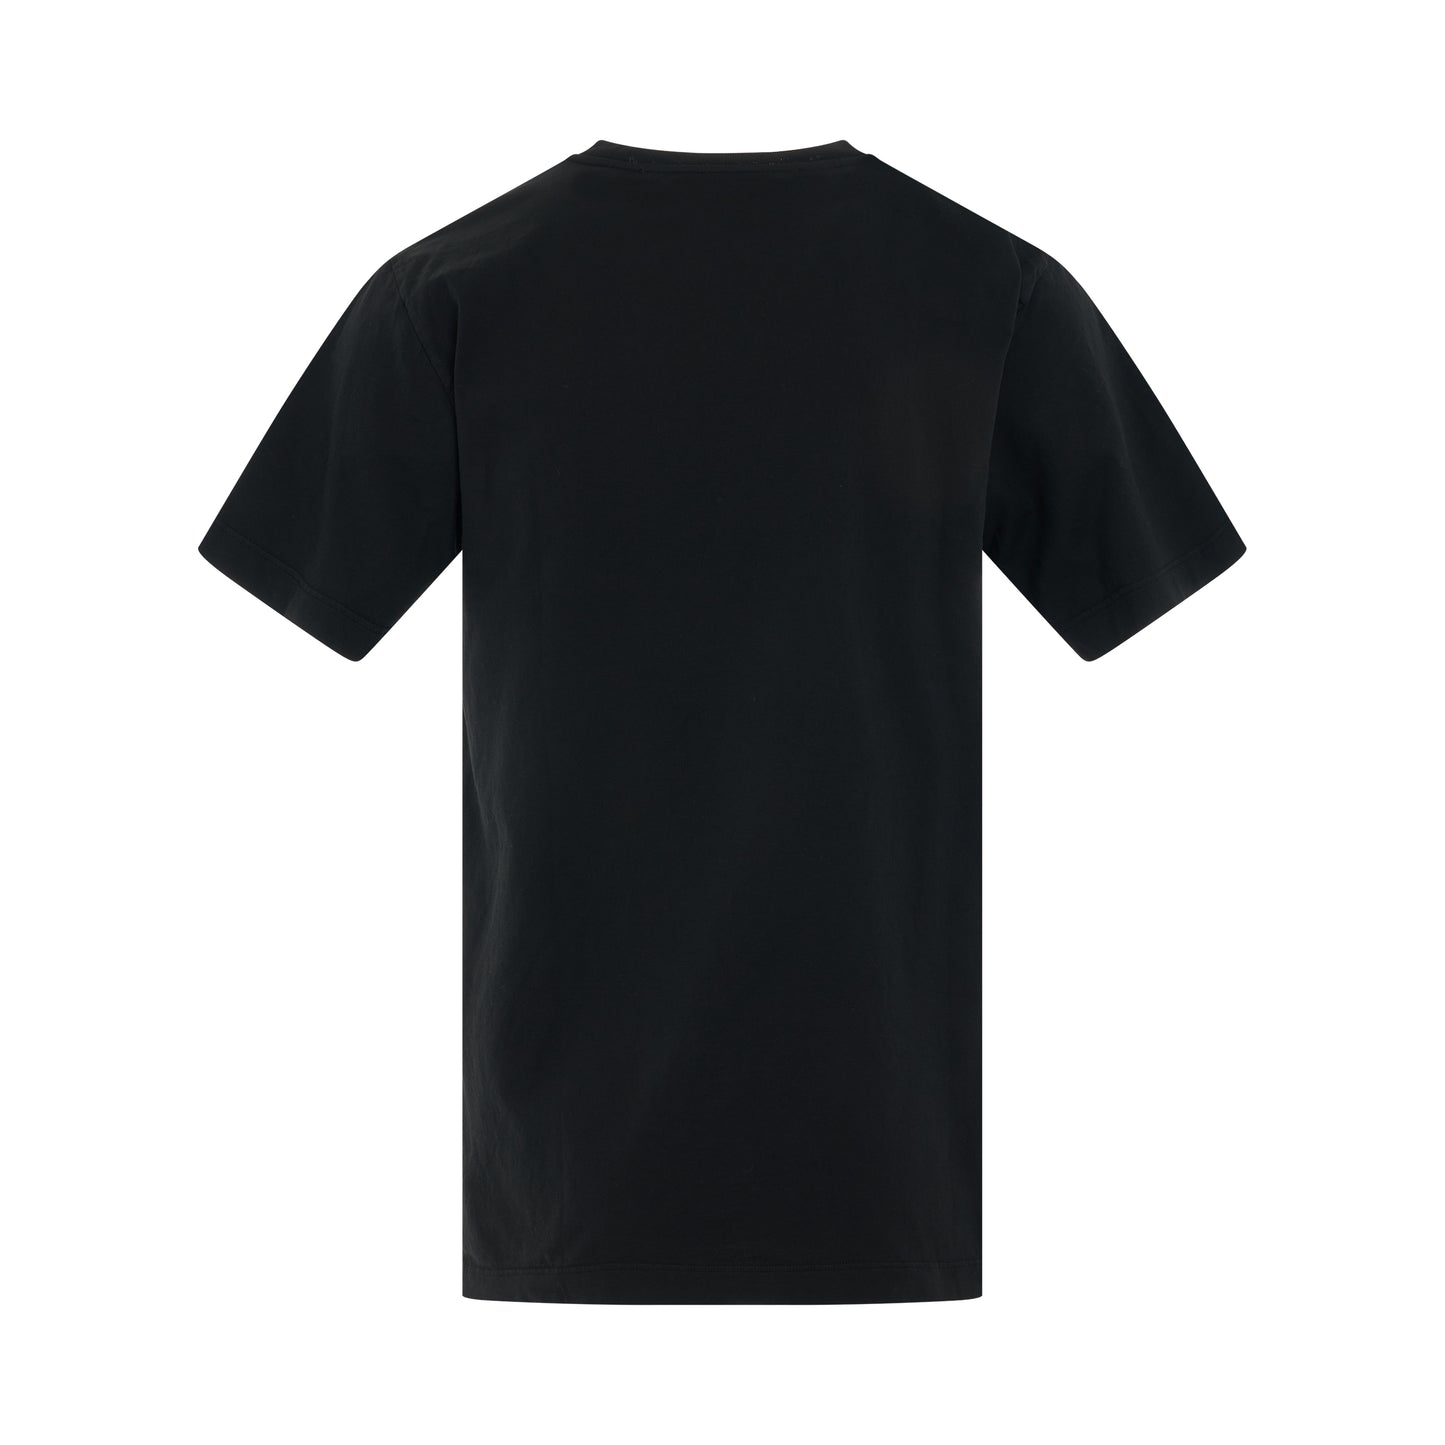 Bookish Laundry Slim Short Sleeve T-Shirt in Black